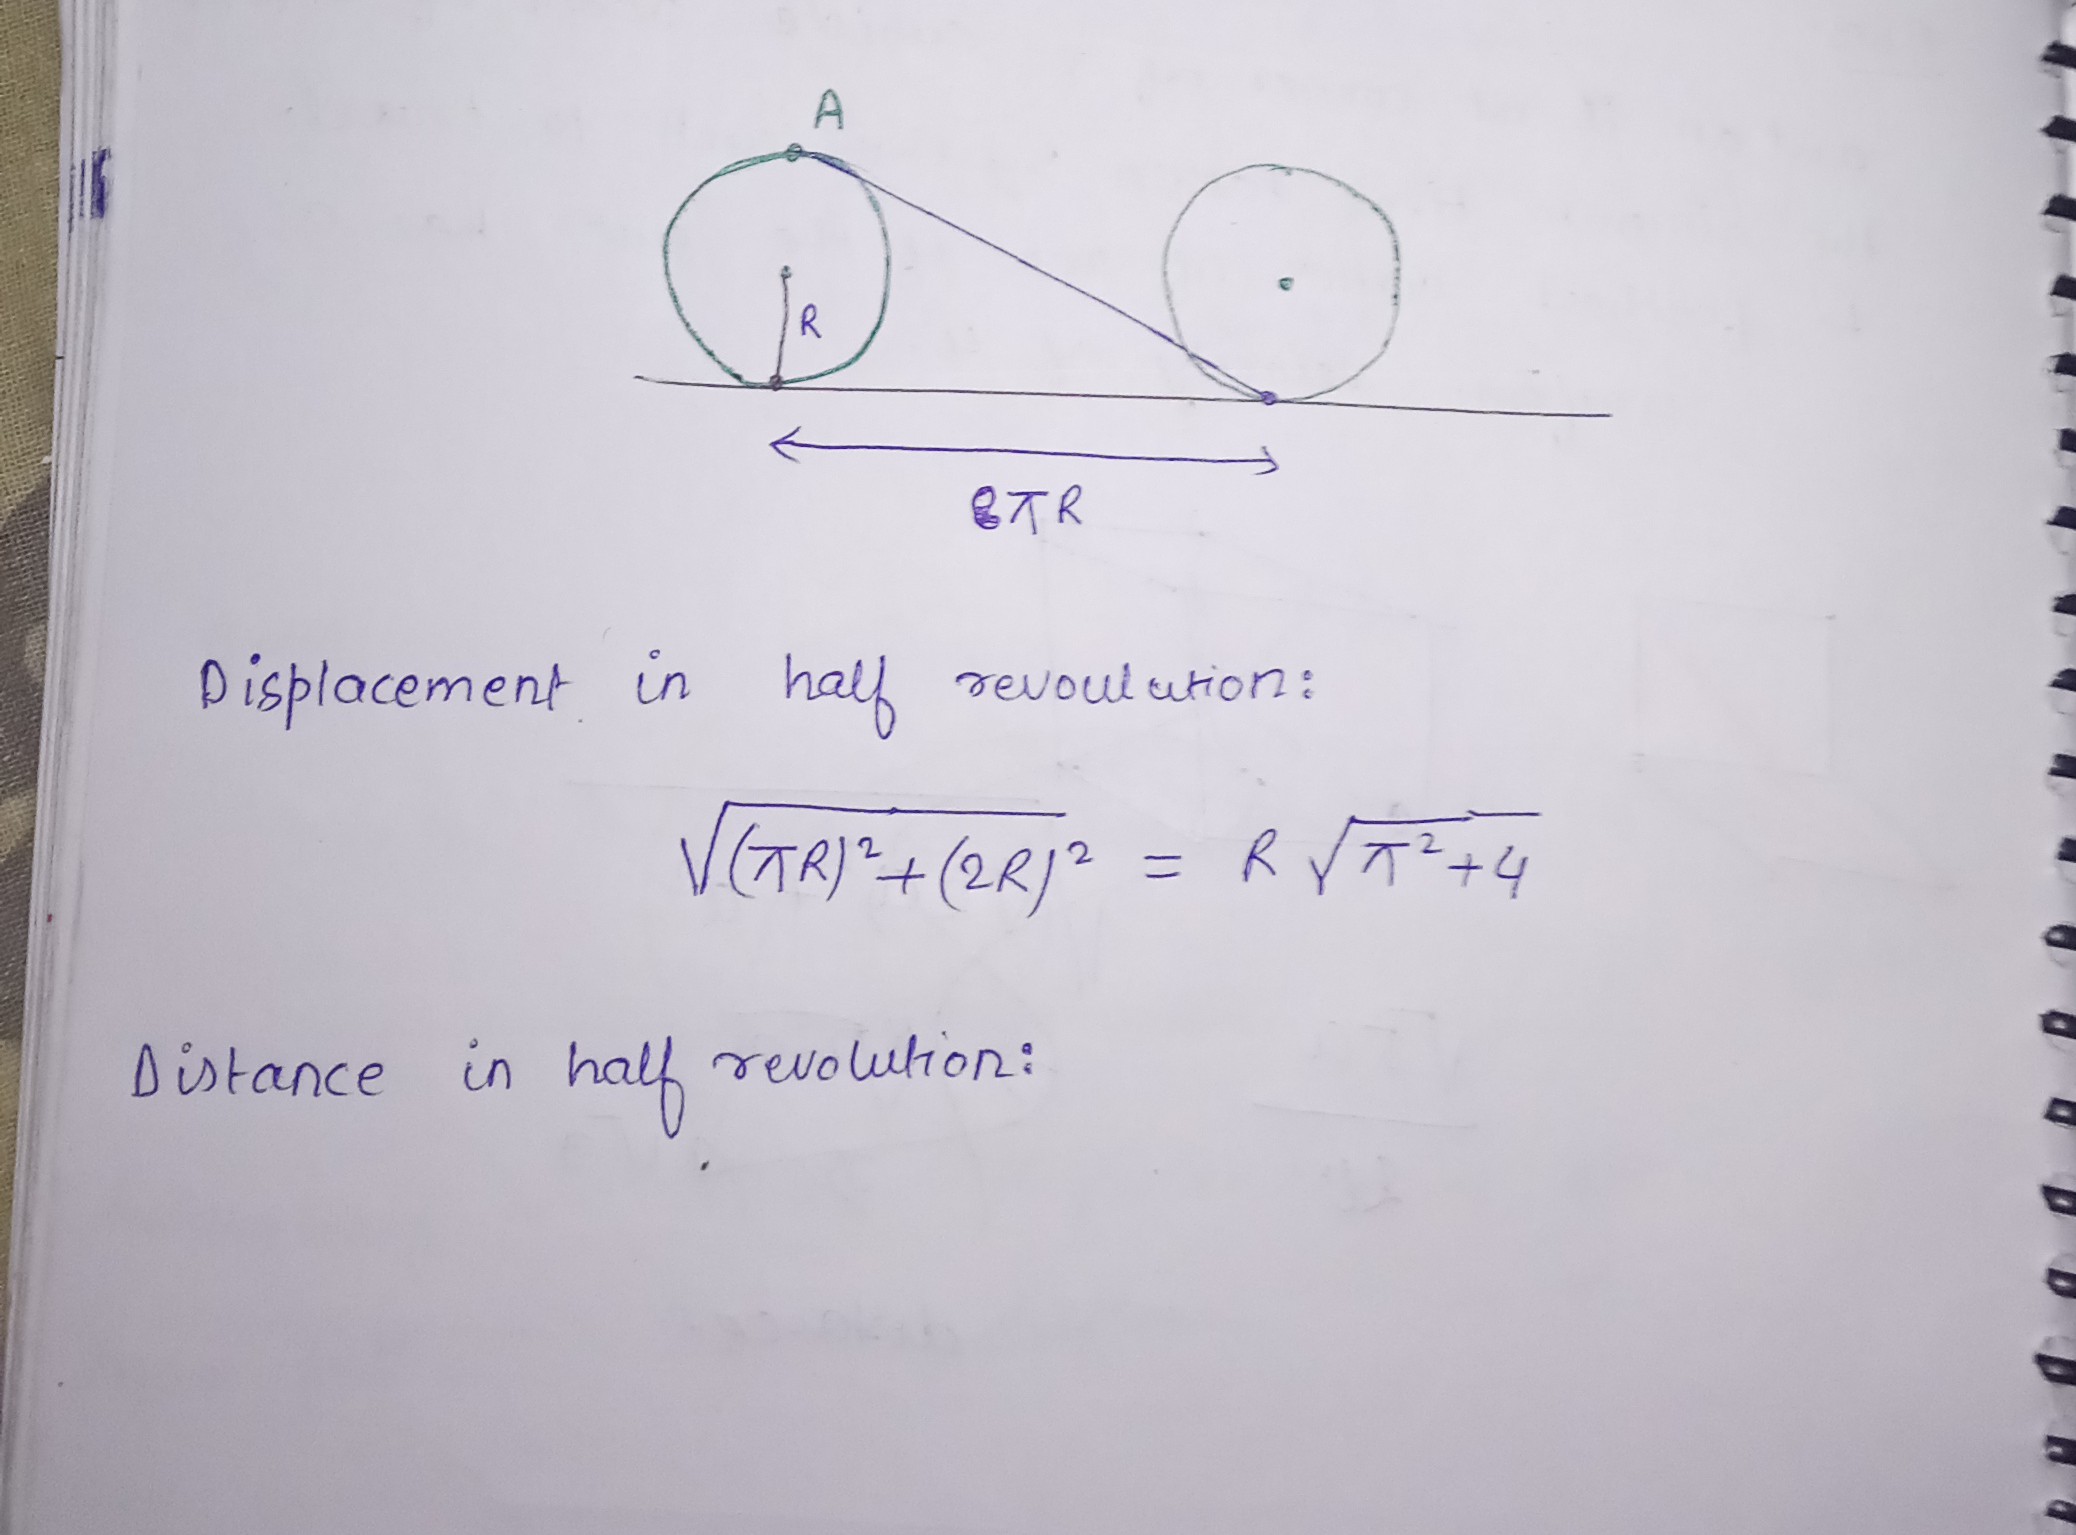 Displacement in half revolution:
(πR)2+(2R)2​=Rπ2+4​
Distance in half 